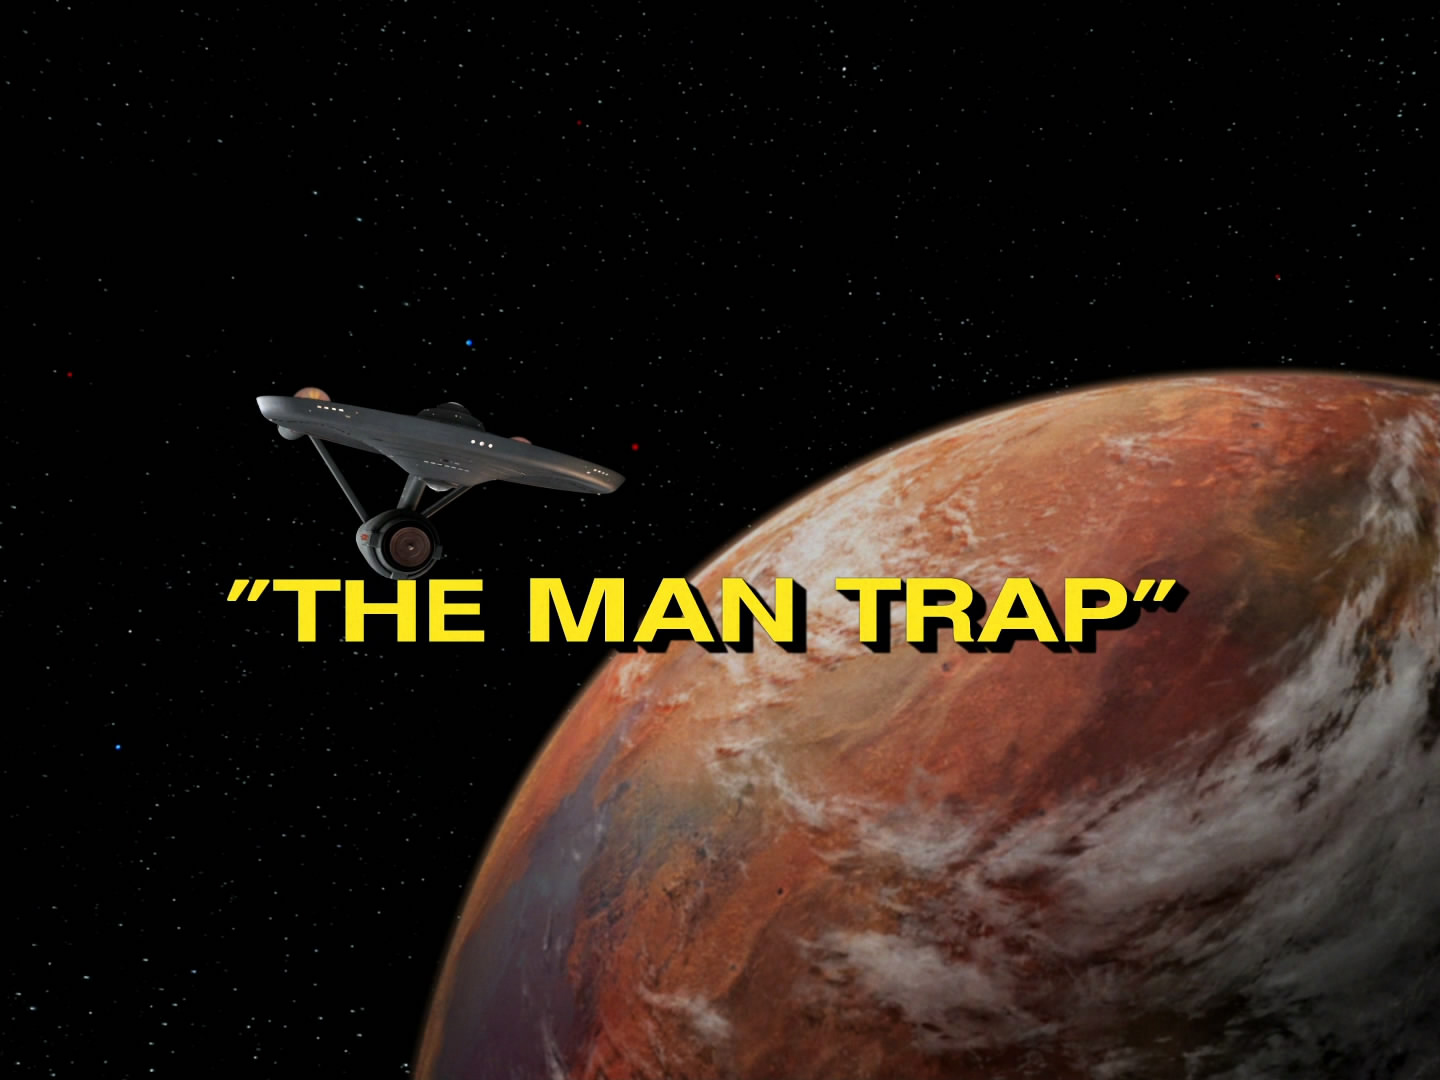 Retro-Rezension: The Original Series 1x01- "The Man Trap" / "Das Letzte seiner Art" 3